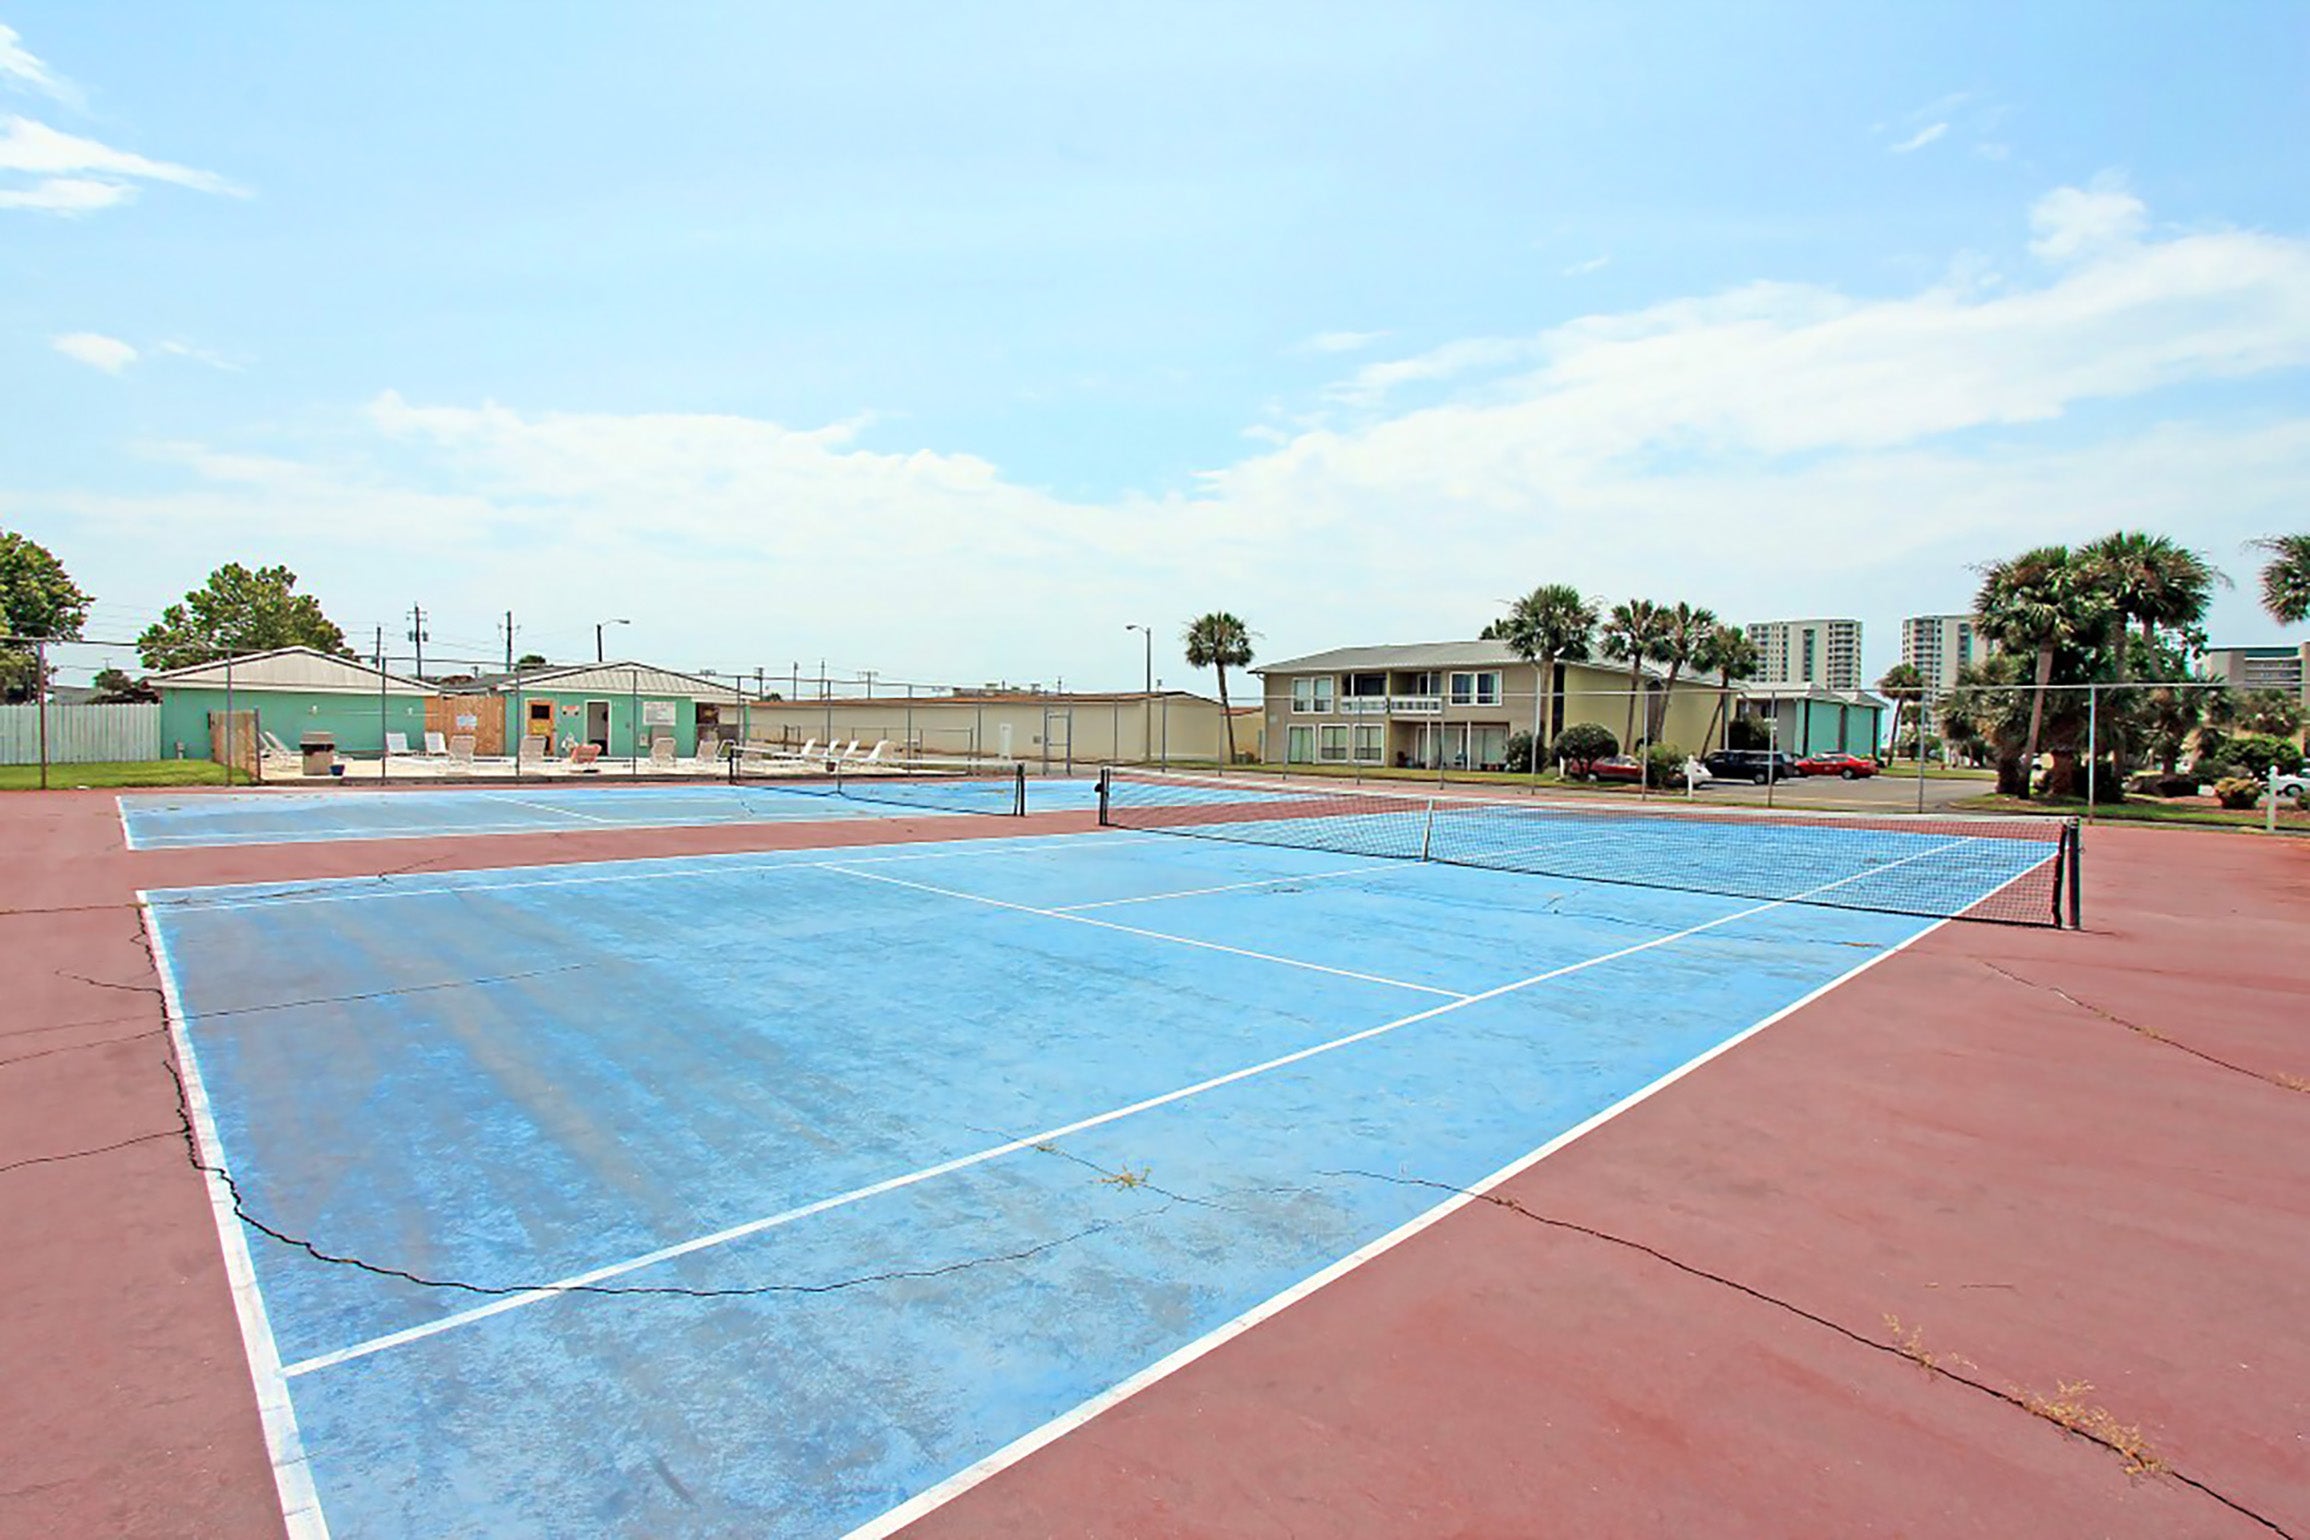 Tennis courts  